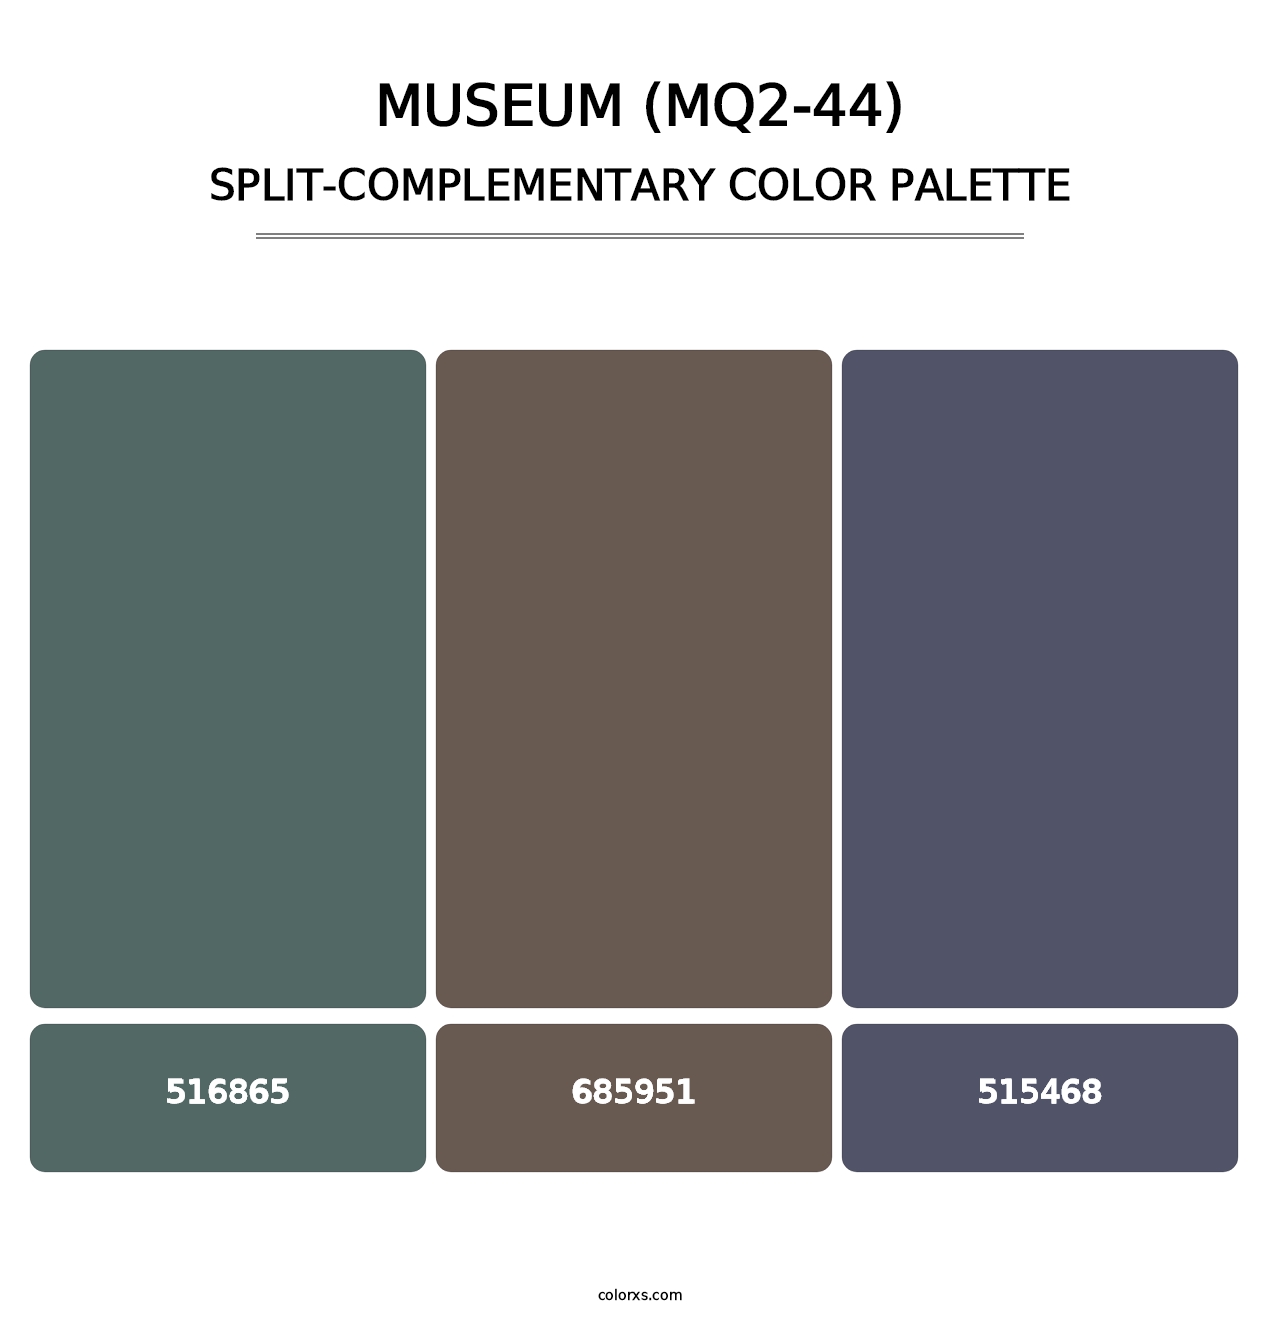 Museum (MQ2-44) - Split-Complementary Color Palette